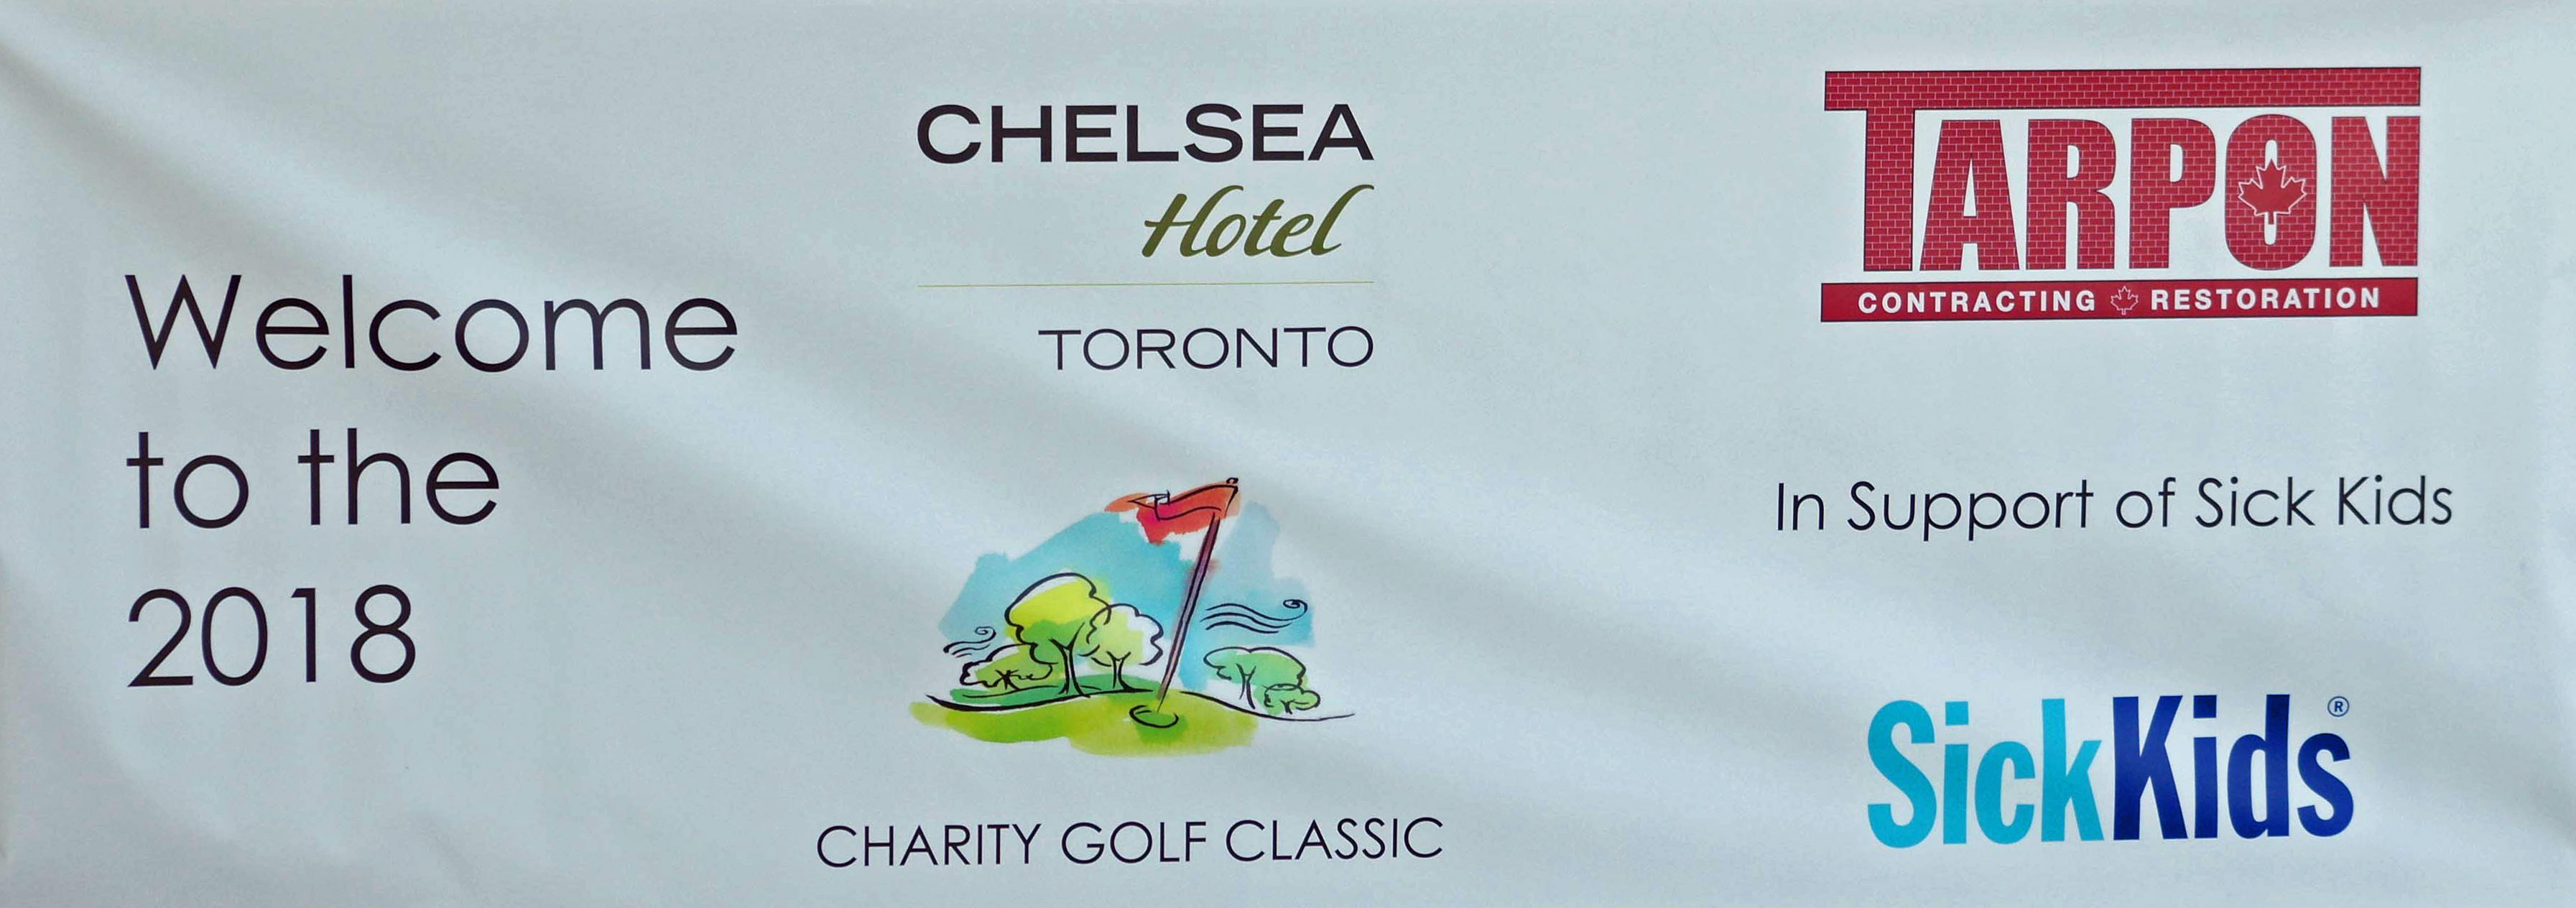 Chelsea Charity Golf Classic